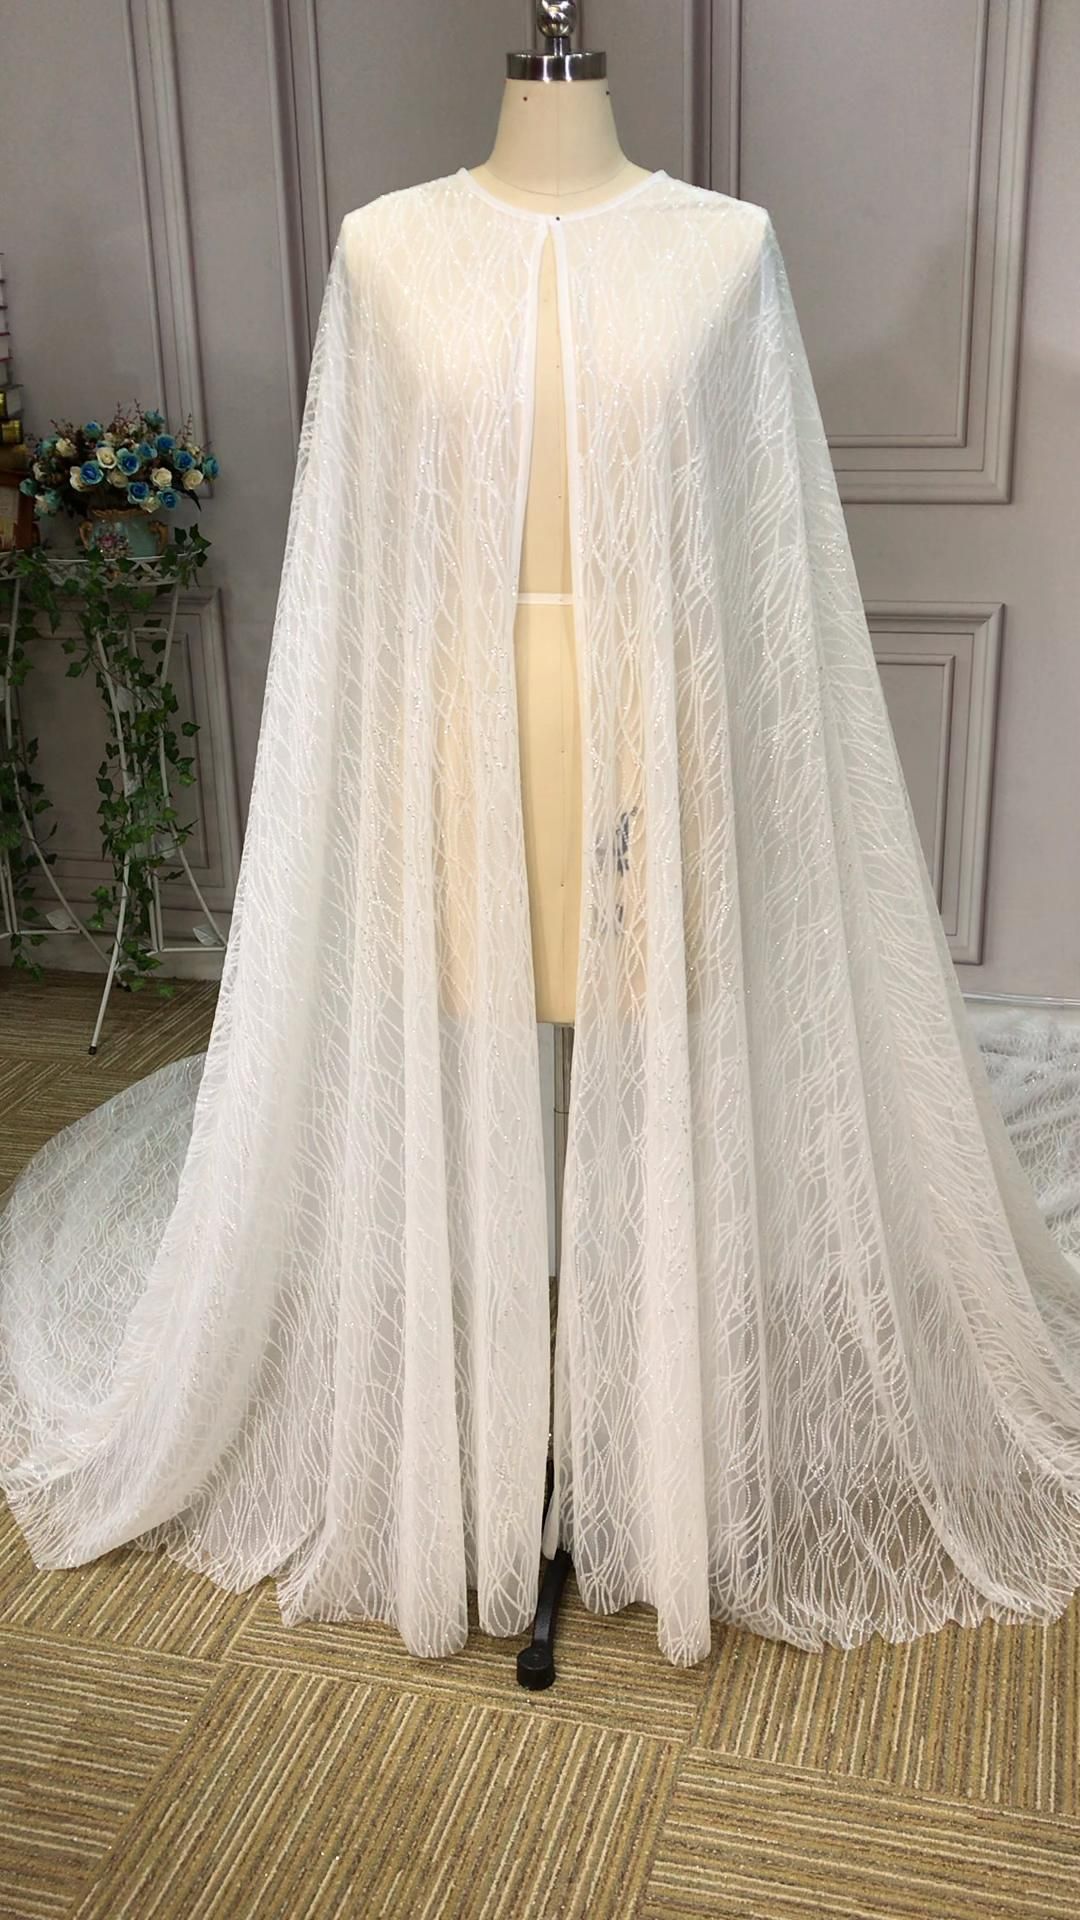 Sparkling Glitter wedding cloak long bridal jacket 2020 wedding fashion trends -   style Hijab wedding